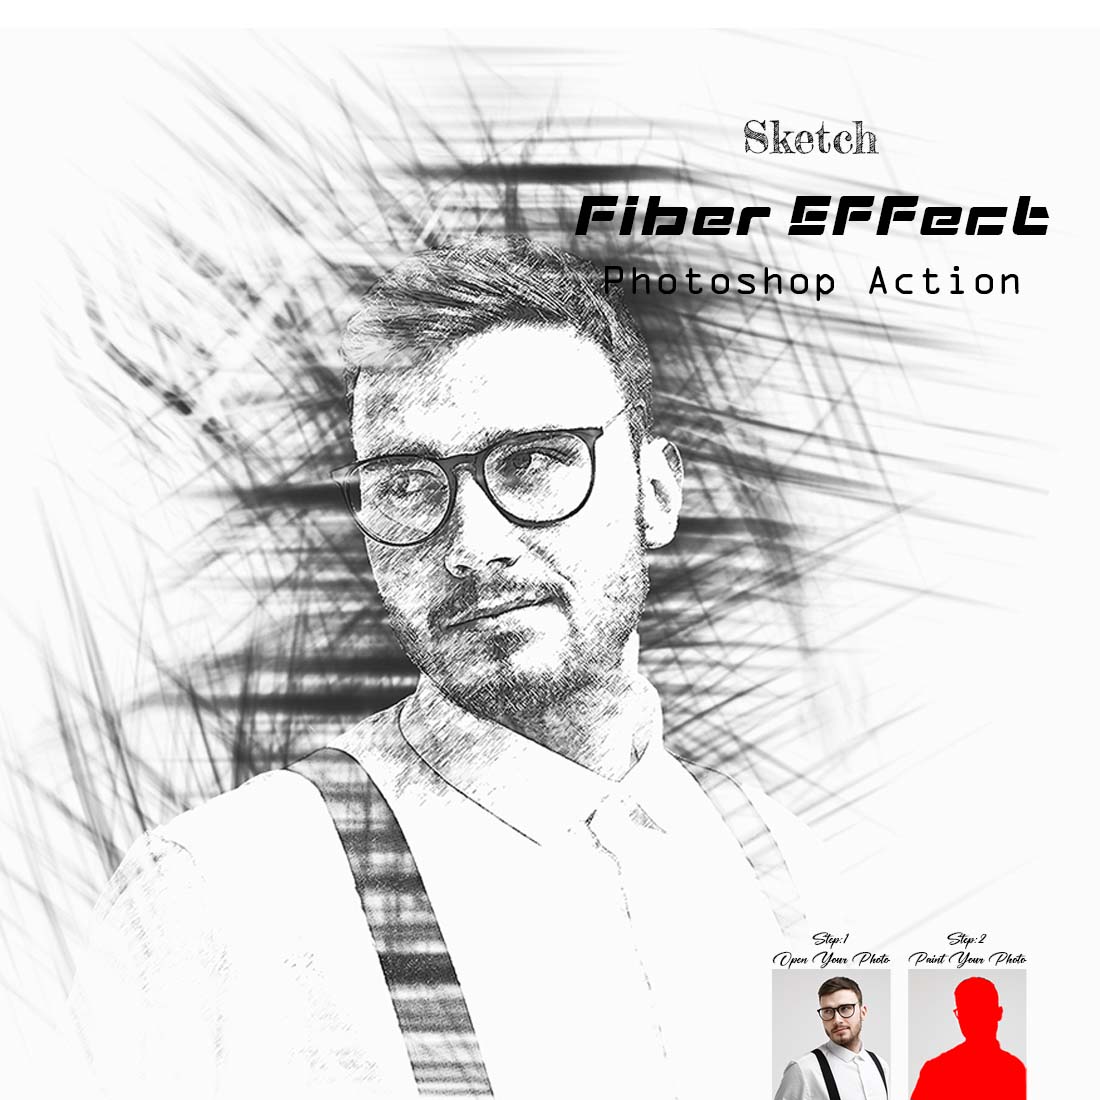 Sketch Fiber Effect Photoshop Action cover image.